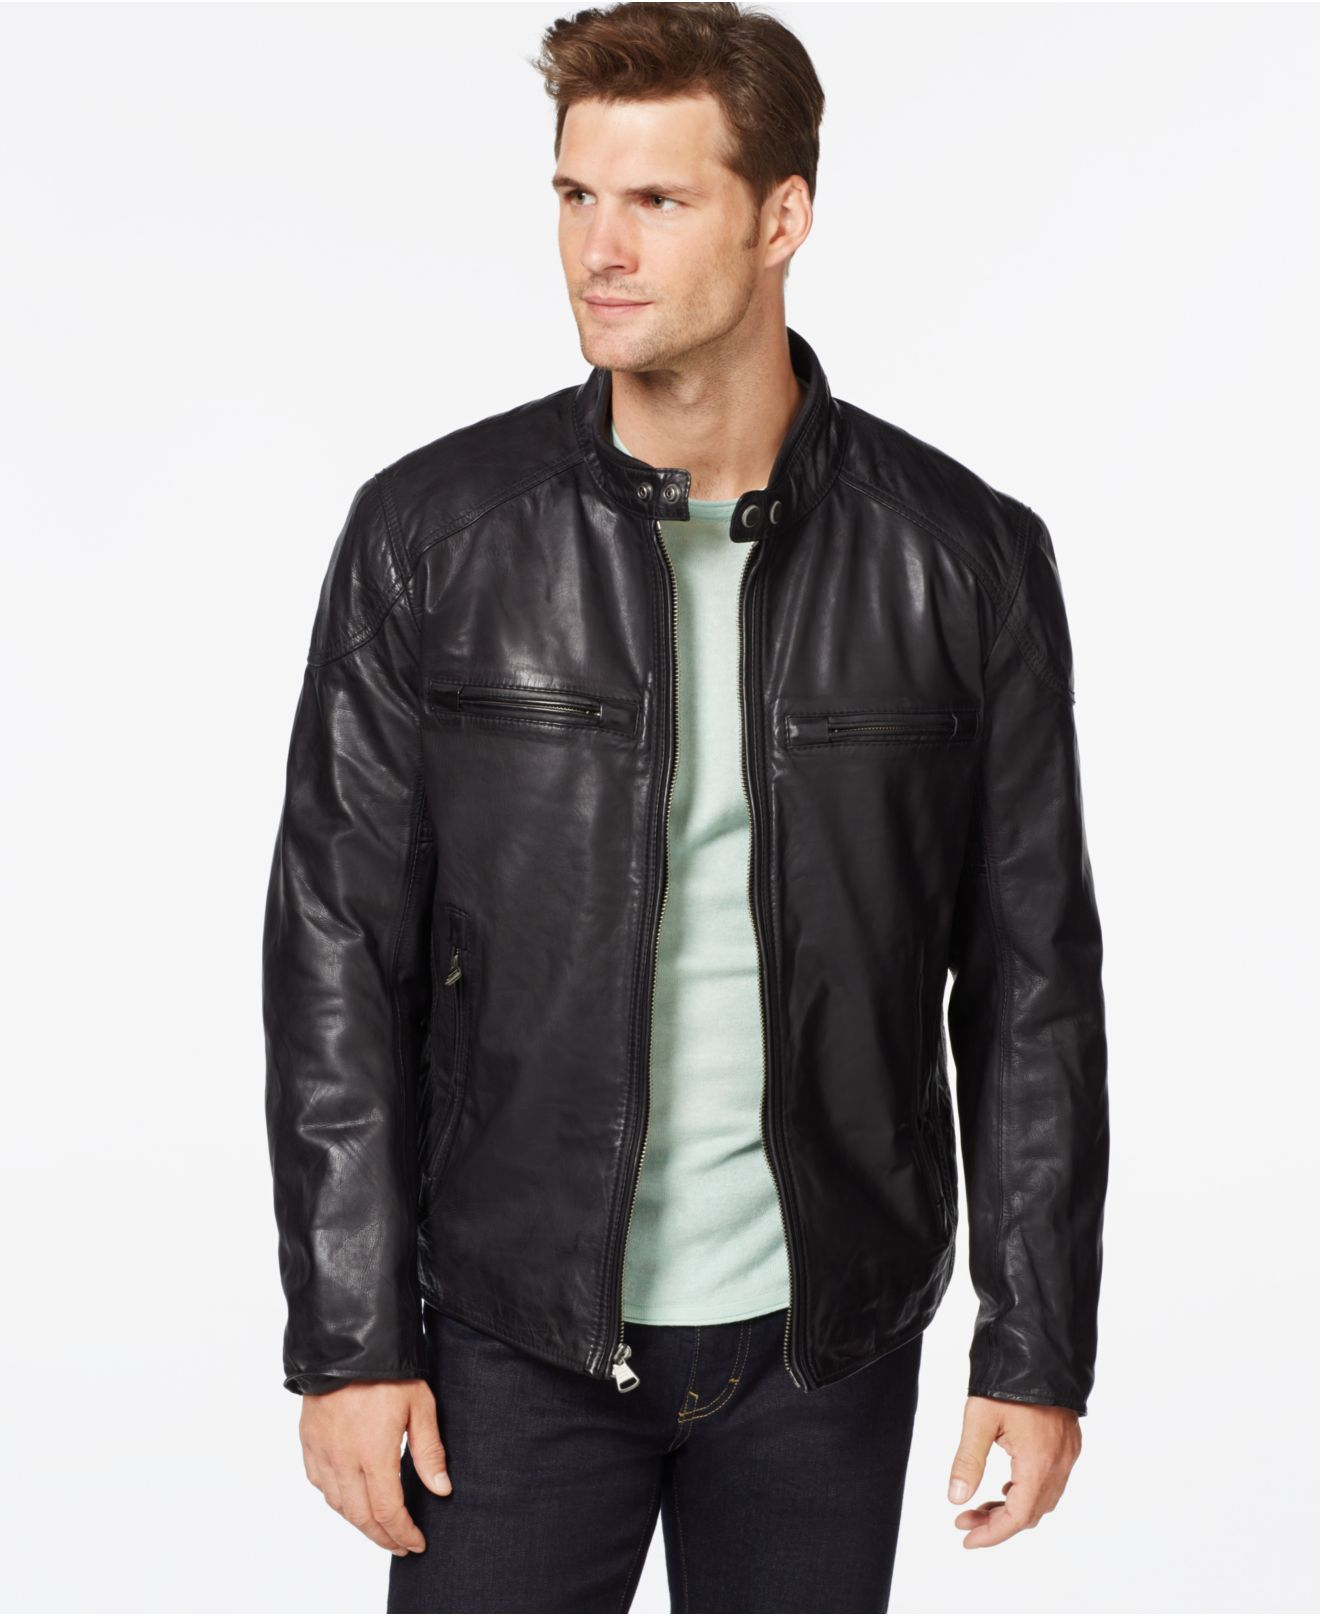 Where to buy a leather jacket nyc – Modern fashion jacket photo blog